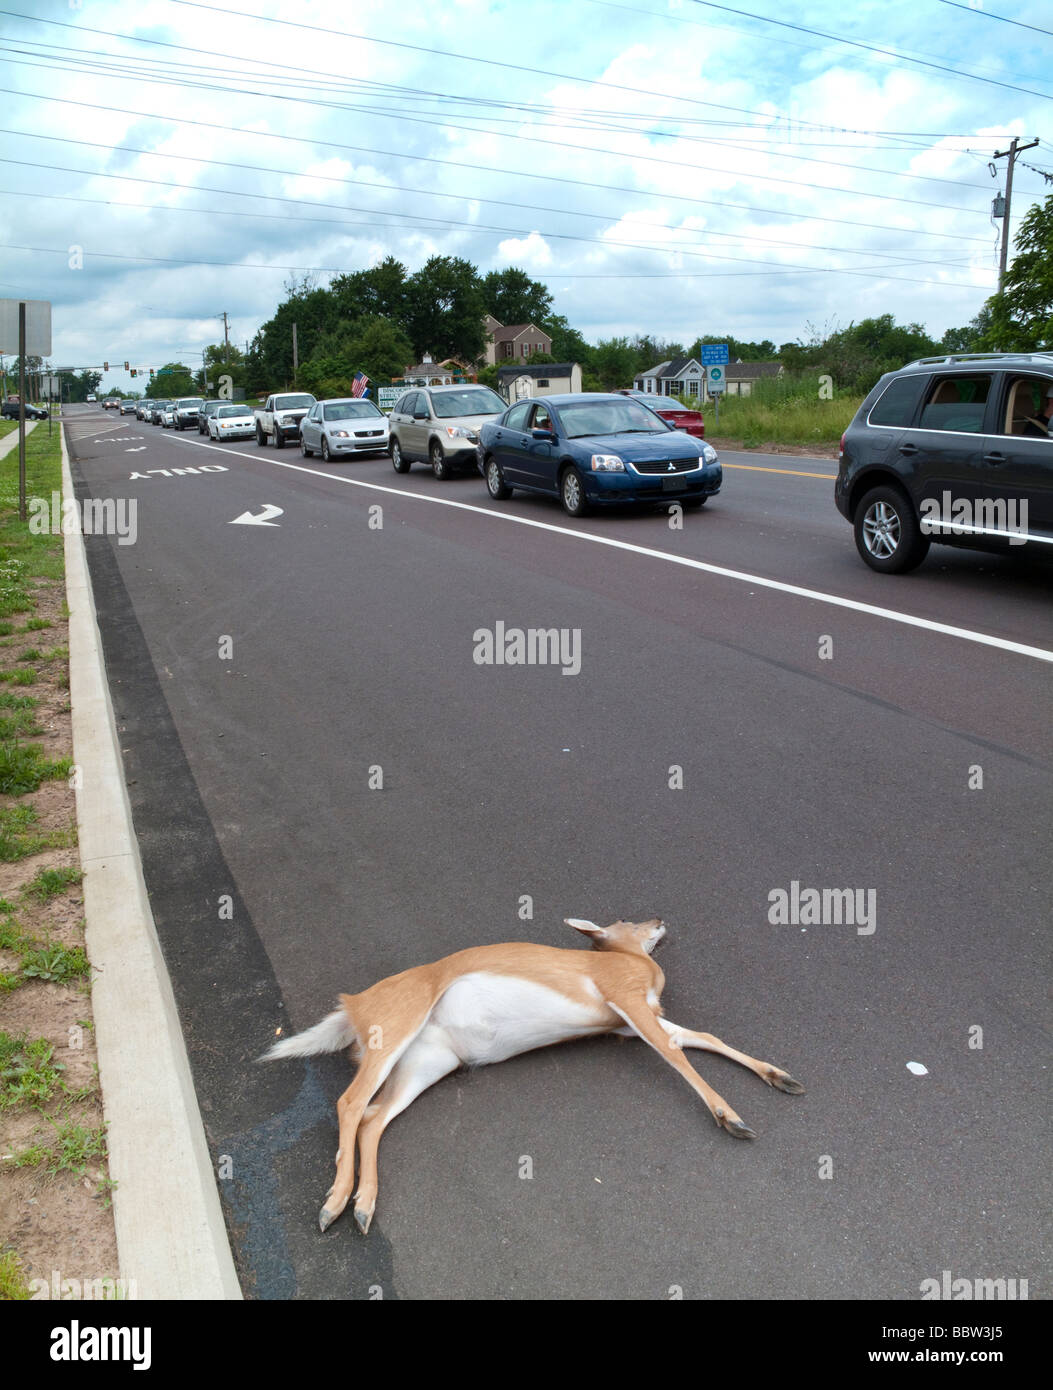 Dead Deer On Public Road In Suburban Pennsylvania Usa BBW3J5 